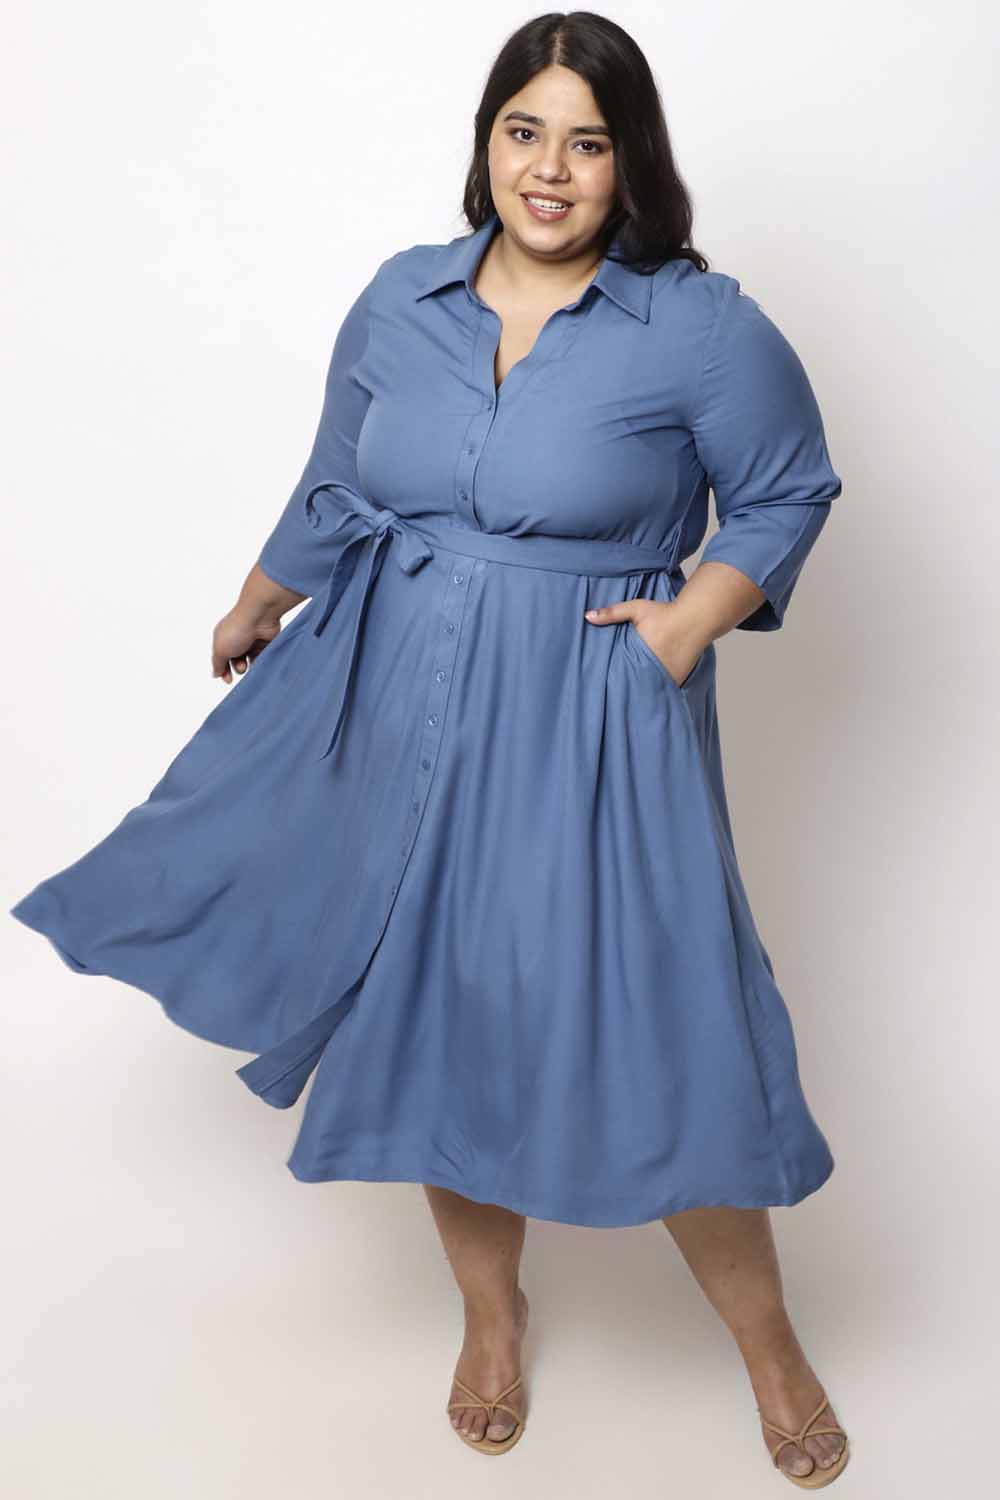 Plus Size Blue Shirt Dress